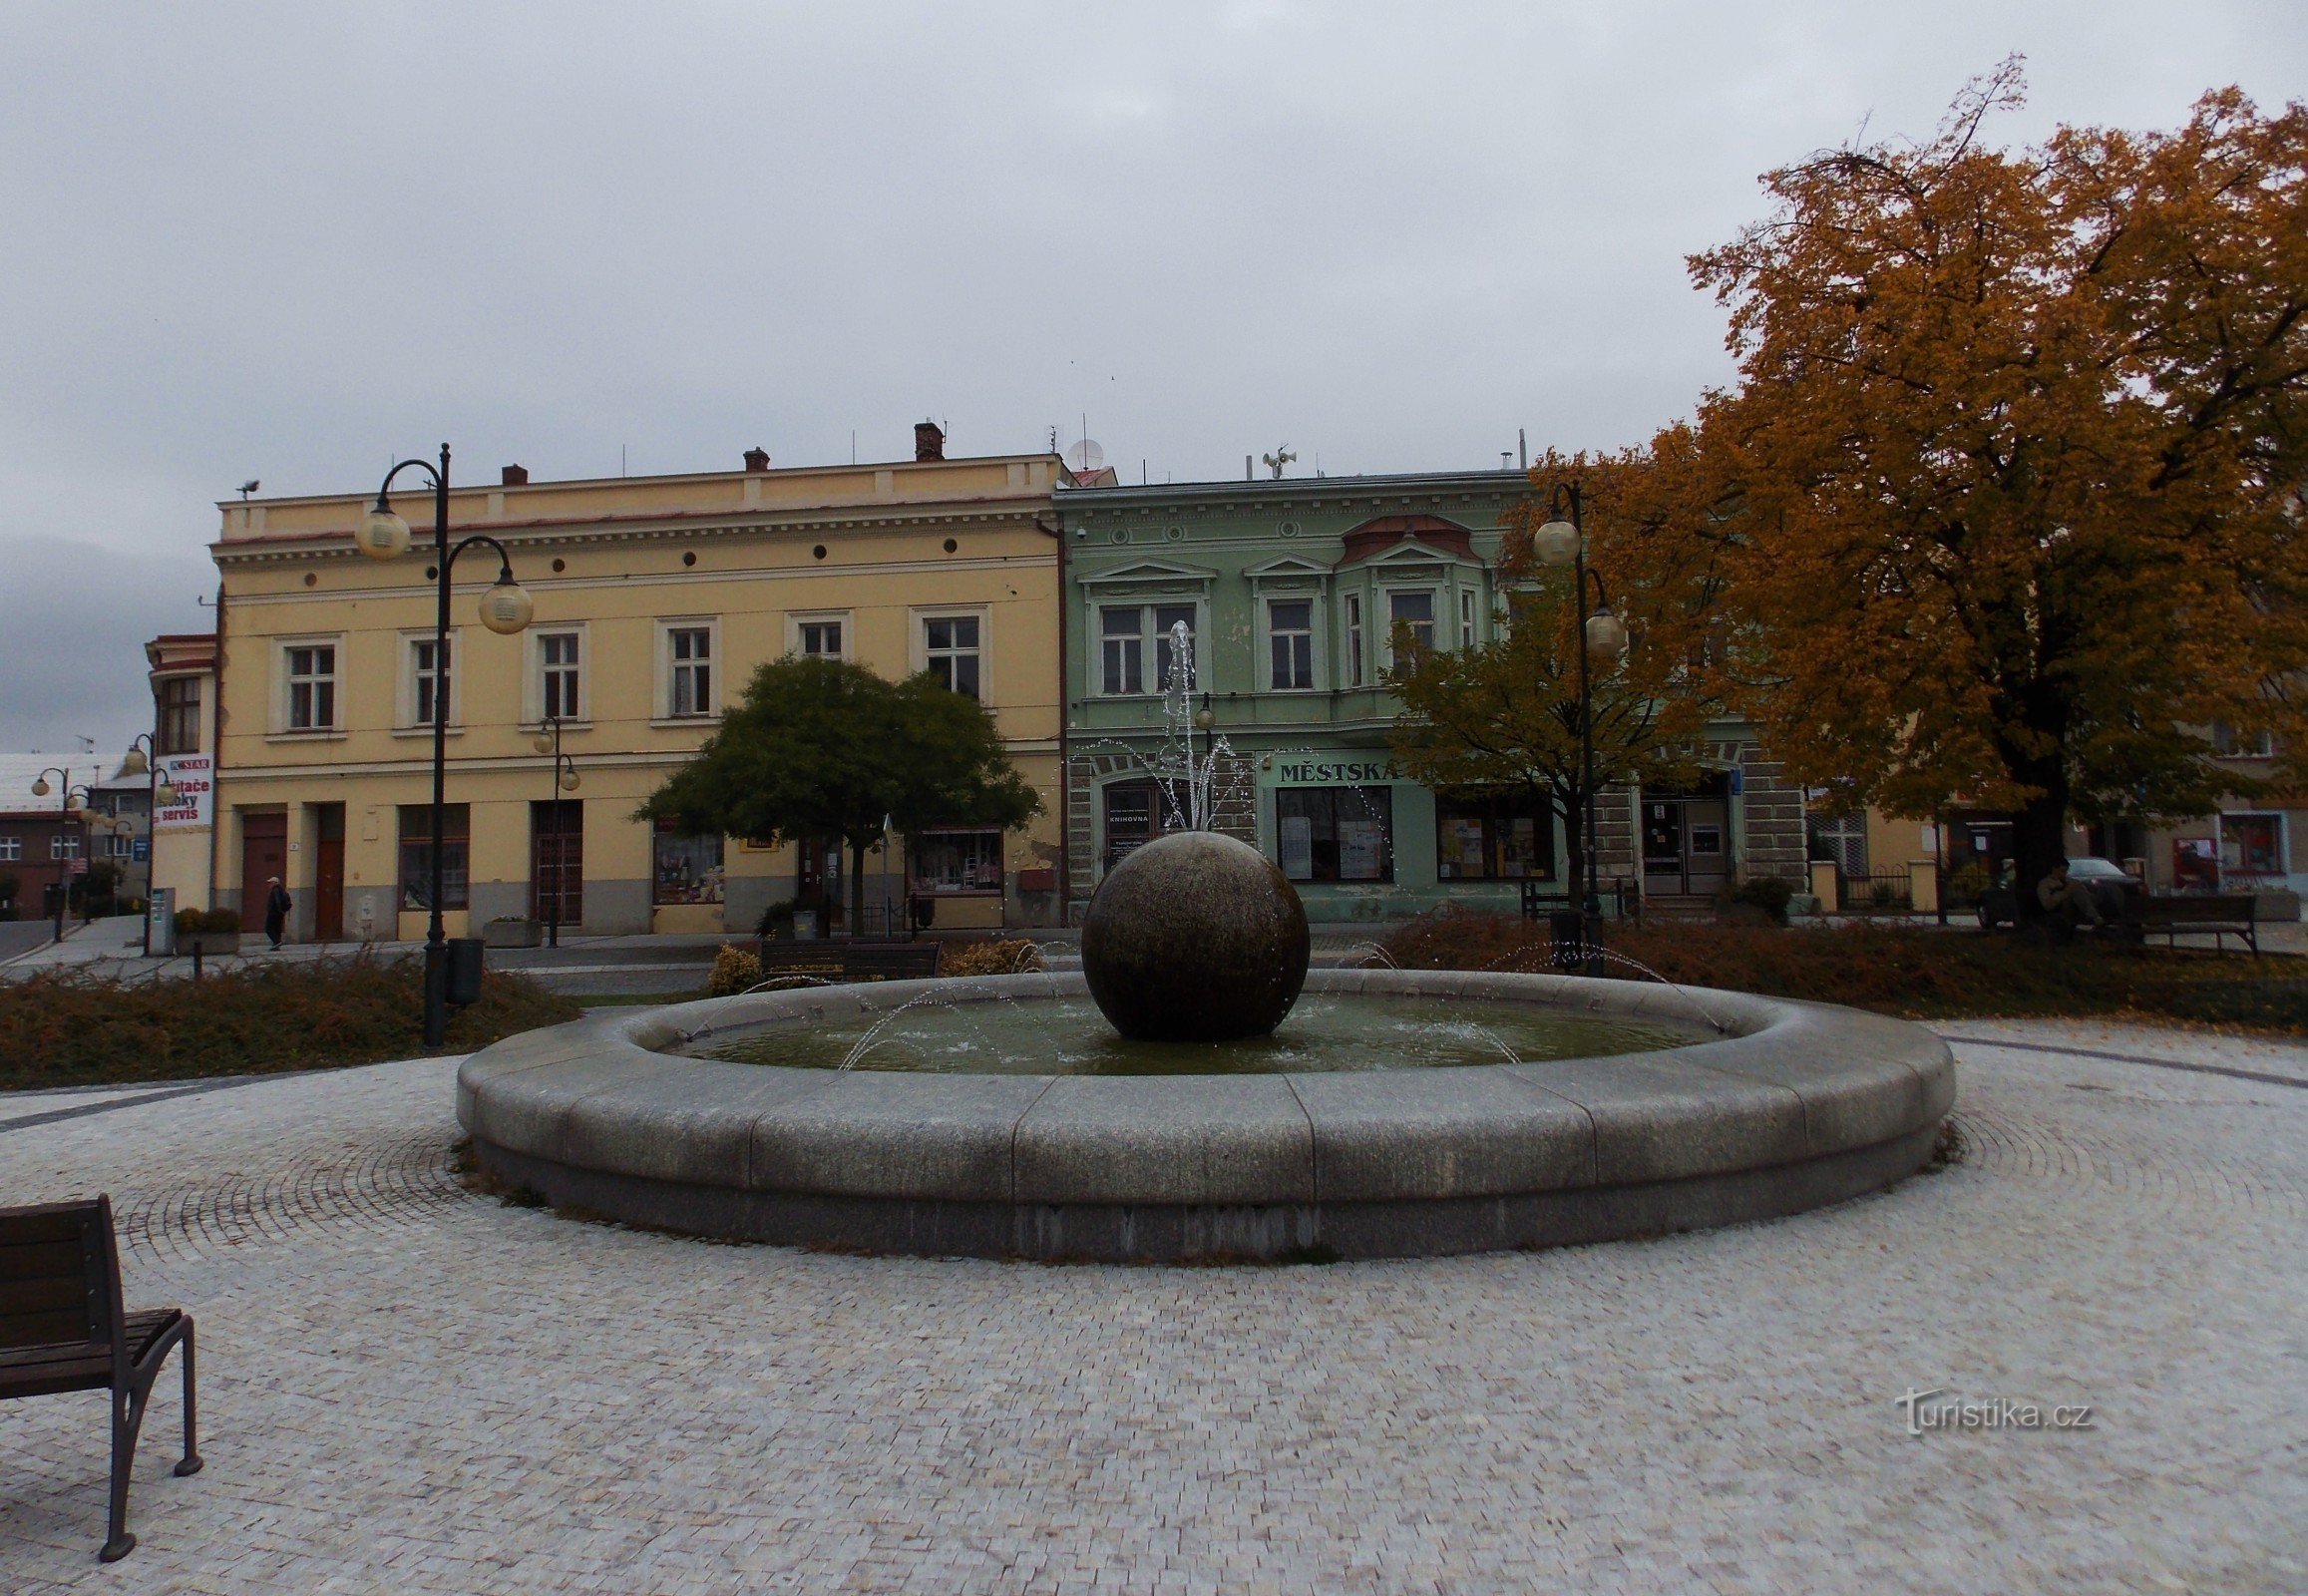 Die Dominante des Holešovský náměstí ist der kreisförmige Brunnen